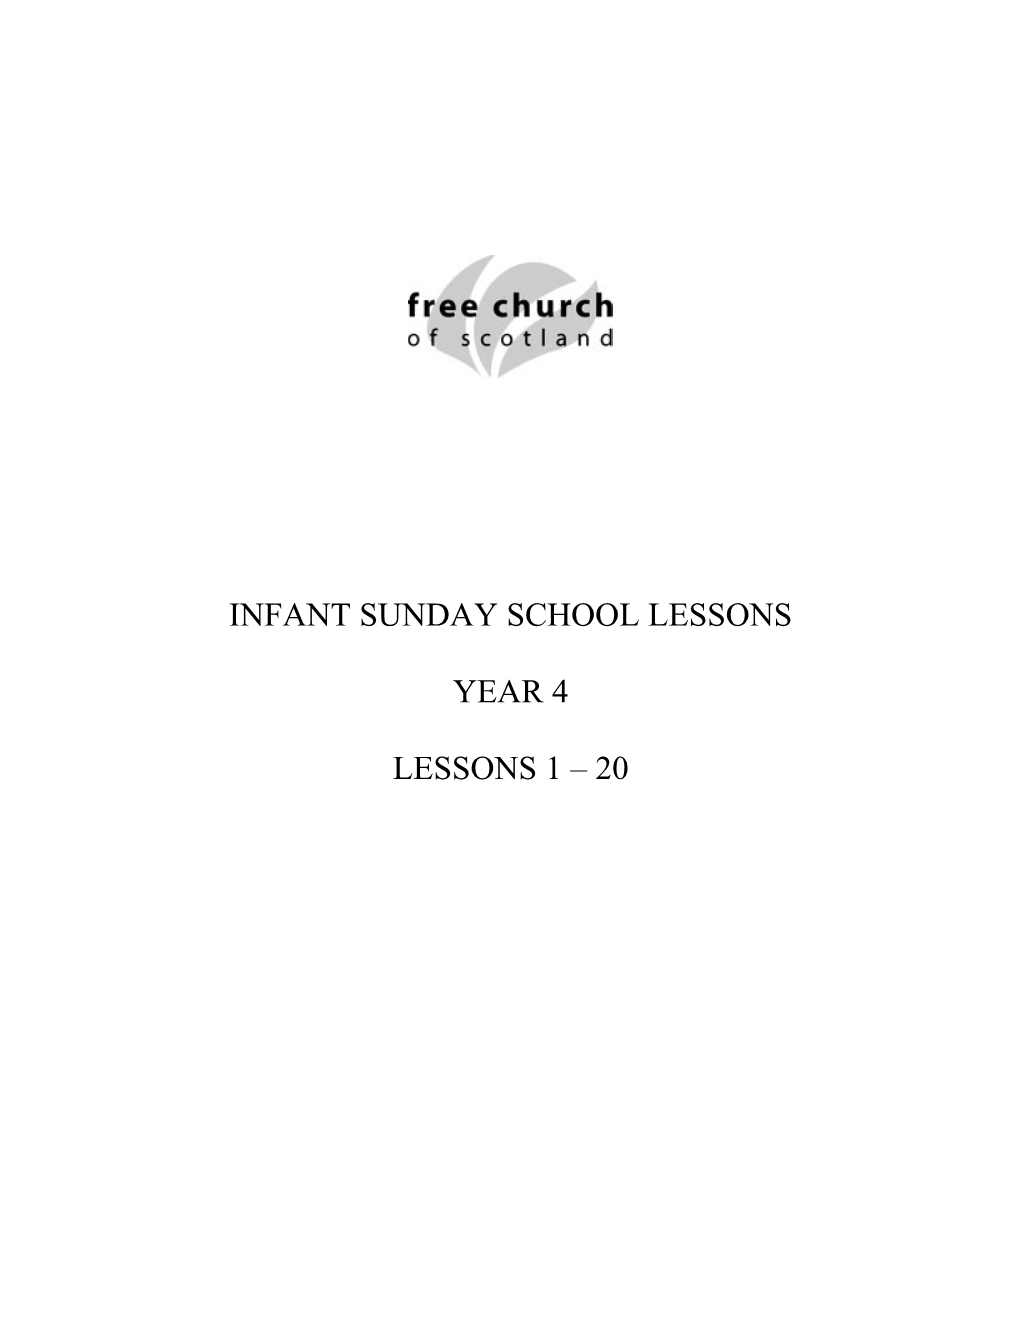 Infant Sunday School Lessons